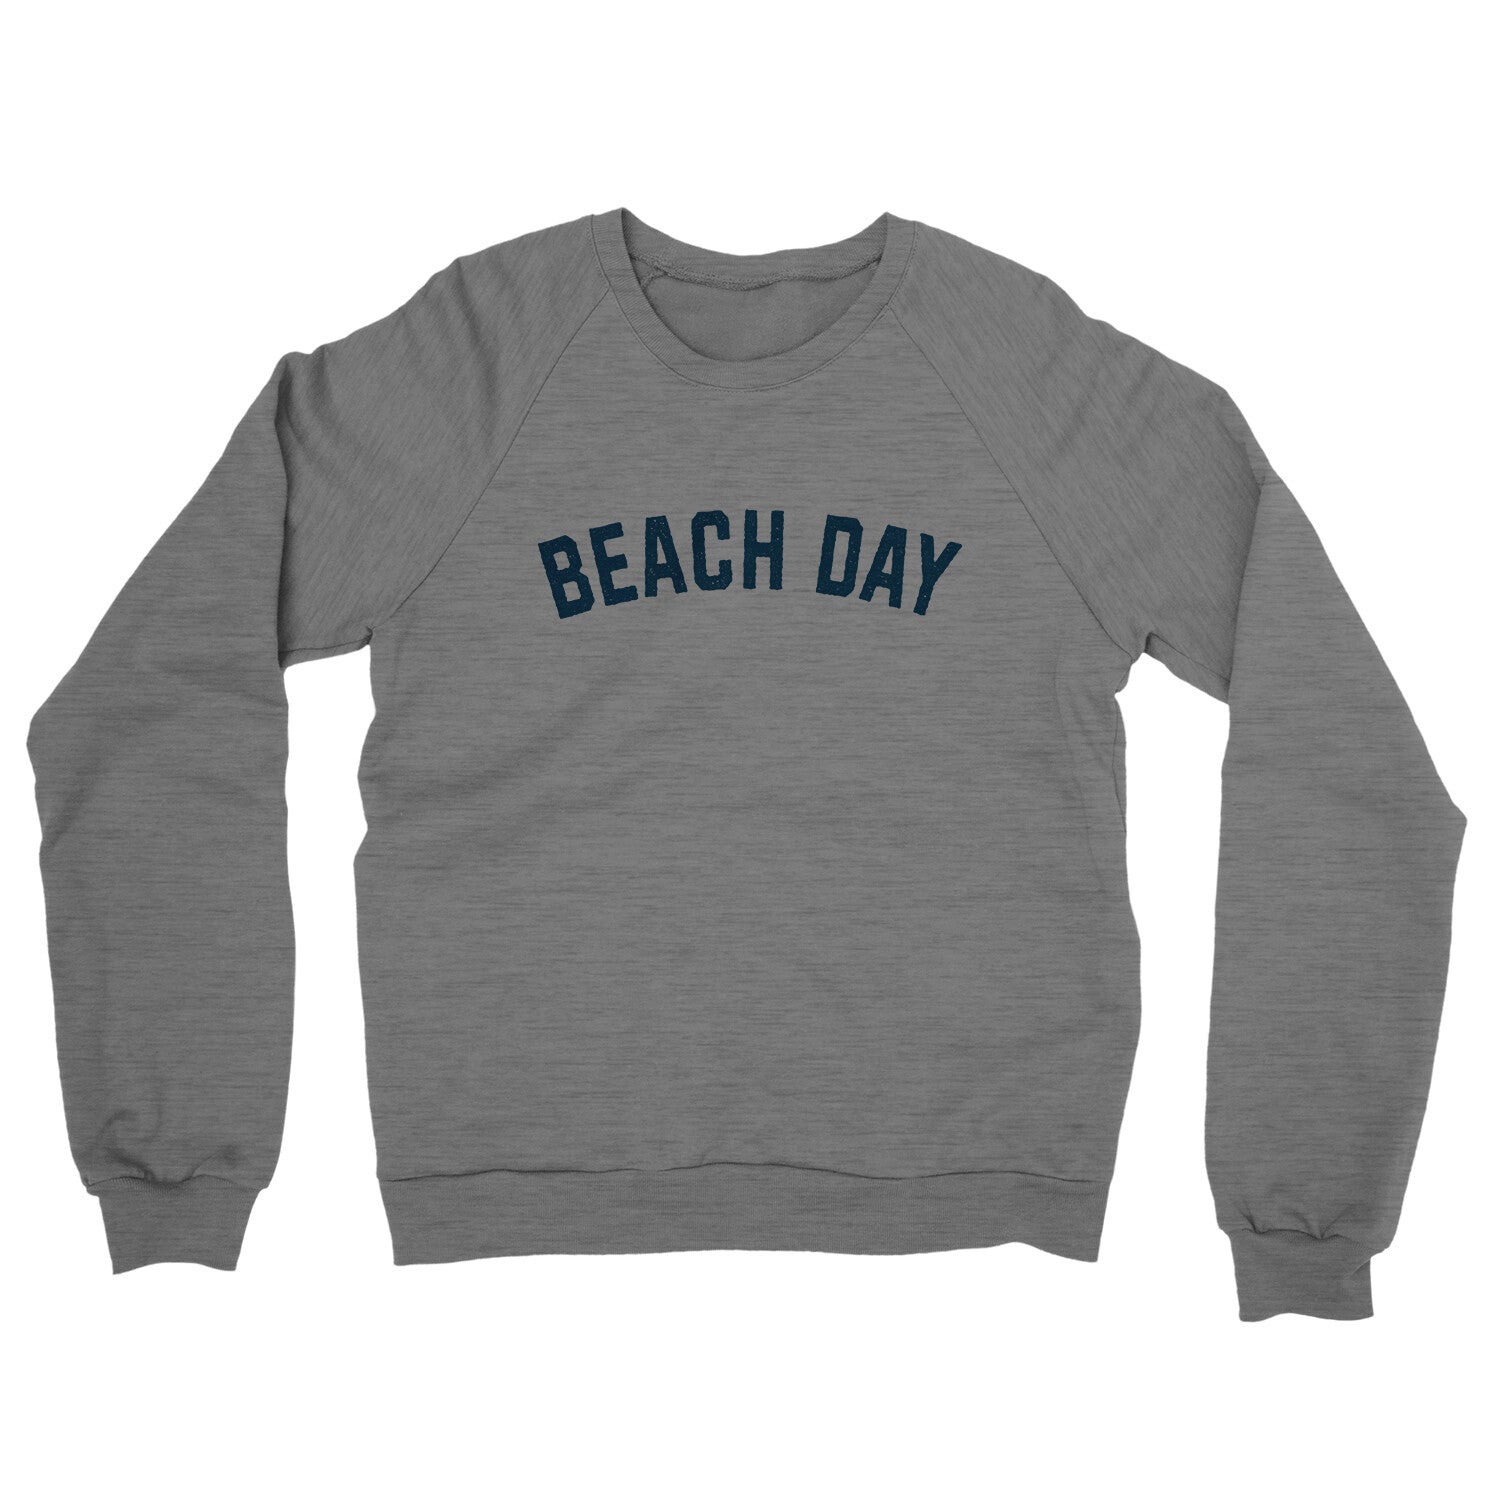 Beach Day in Graphite Heather Color